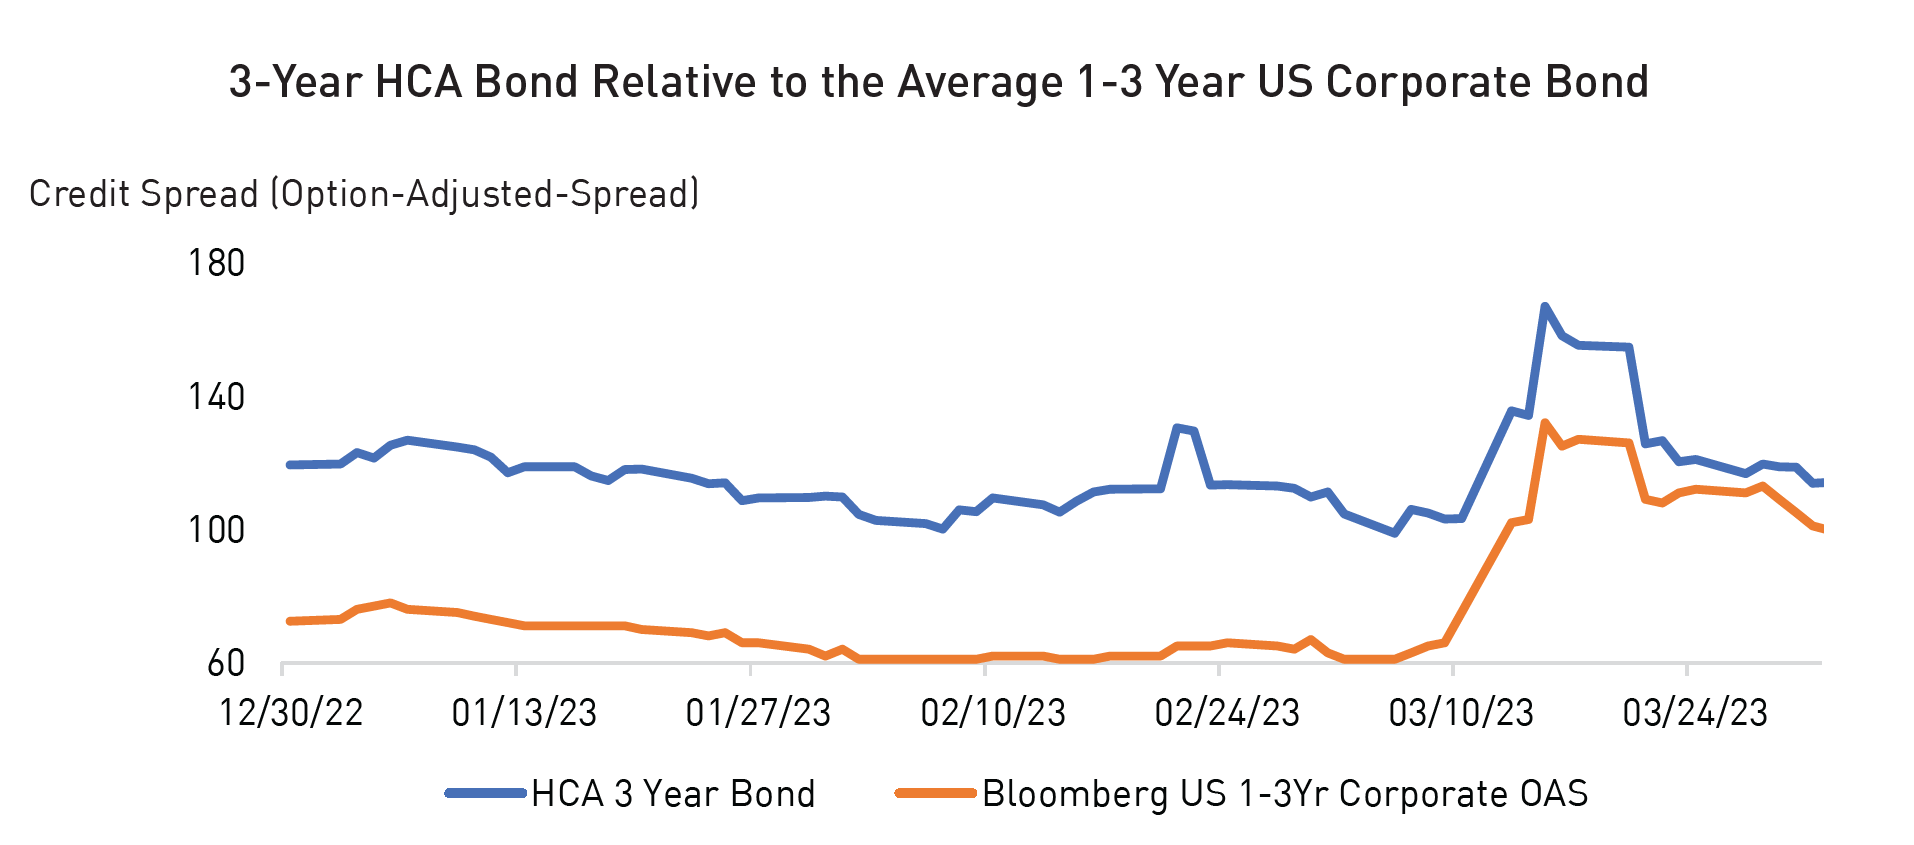 3-Year HCA Bonds Relative to the Average 1-3 Year US Corporate Bond